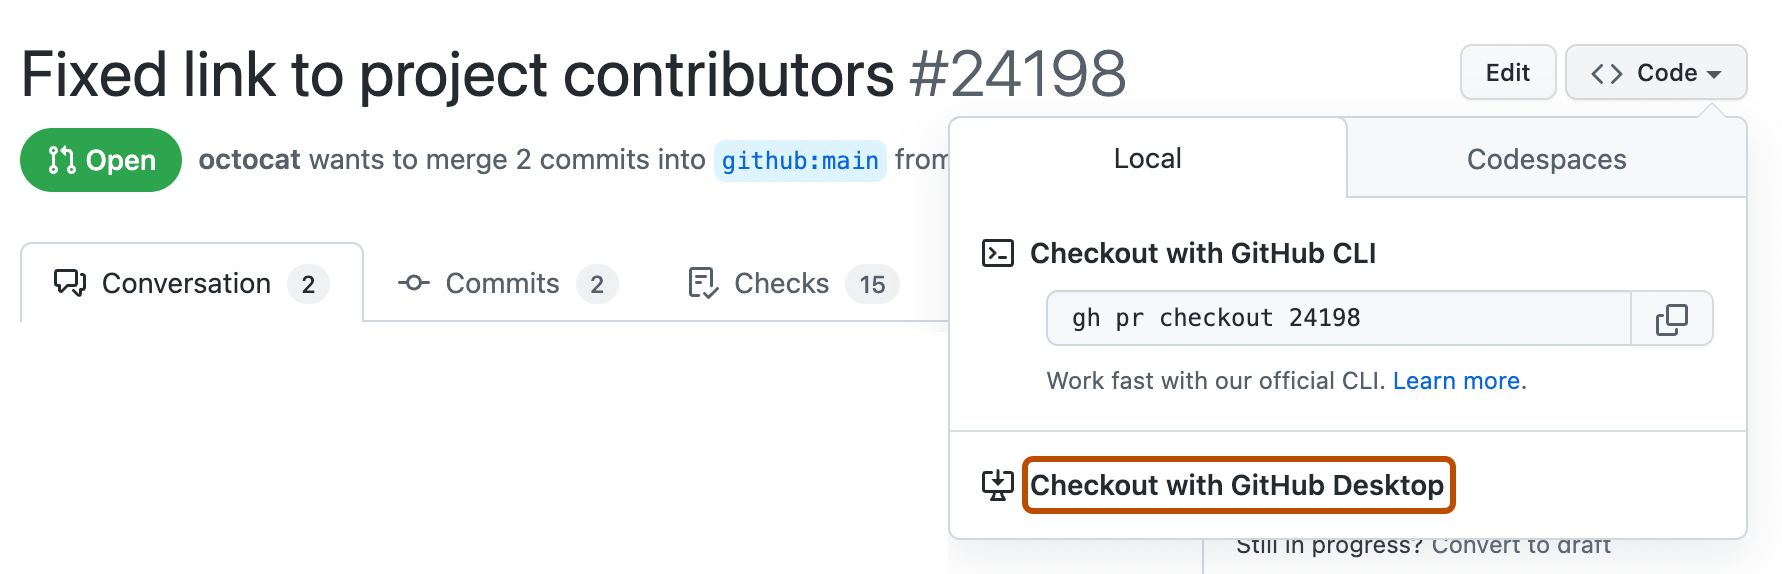 GitHub의 풀 리퀘스트 스크린샷. "코드" 드롭다운 메뉴가 확장되고, "GitHub Desktop을 사용한 체크 아웃"이라는 레이블이 지정된 버튼이 주황색으로 표시됩니다.